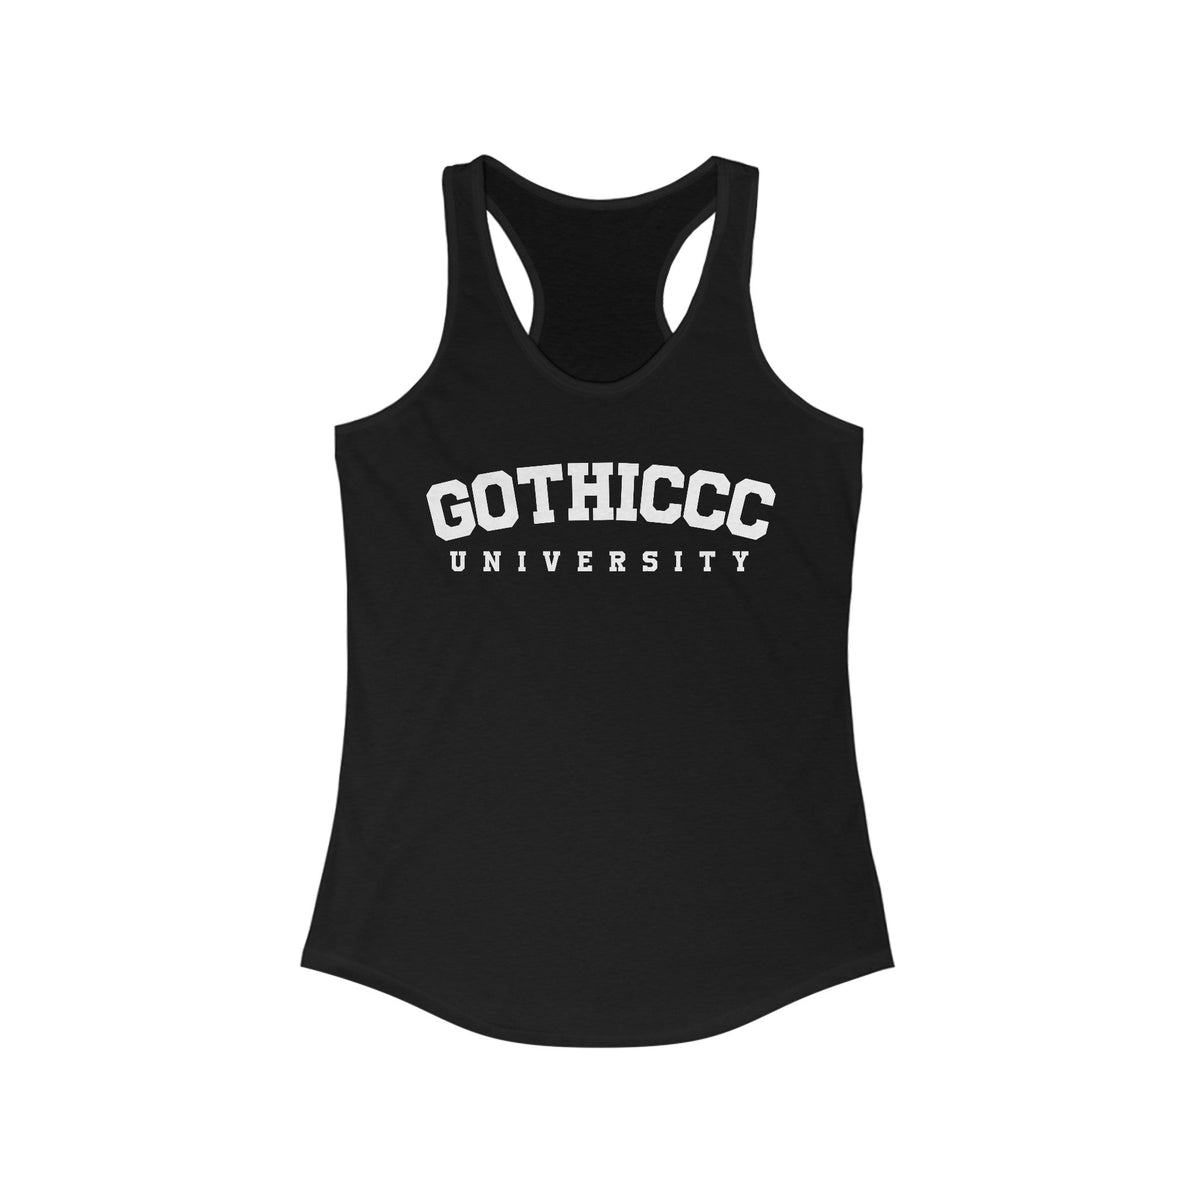 Gothiccc University Women's Racerback Tank - Goth Cloth Co.Tank Top30820406249223344761